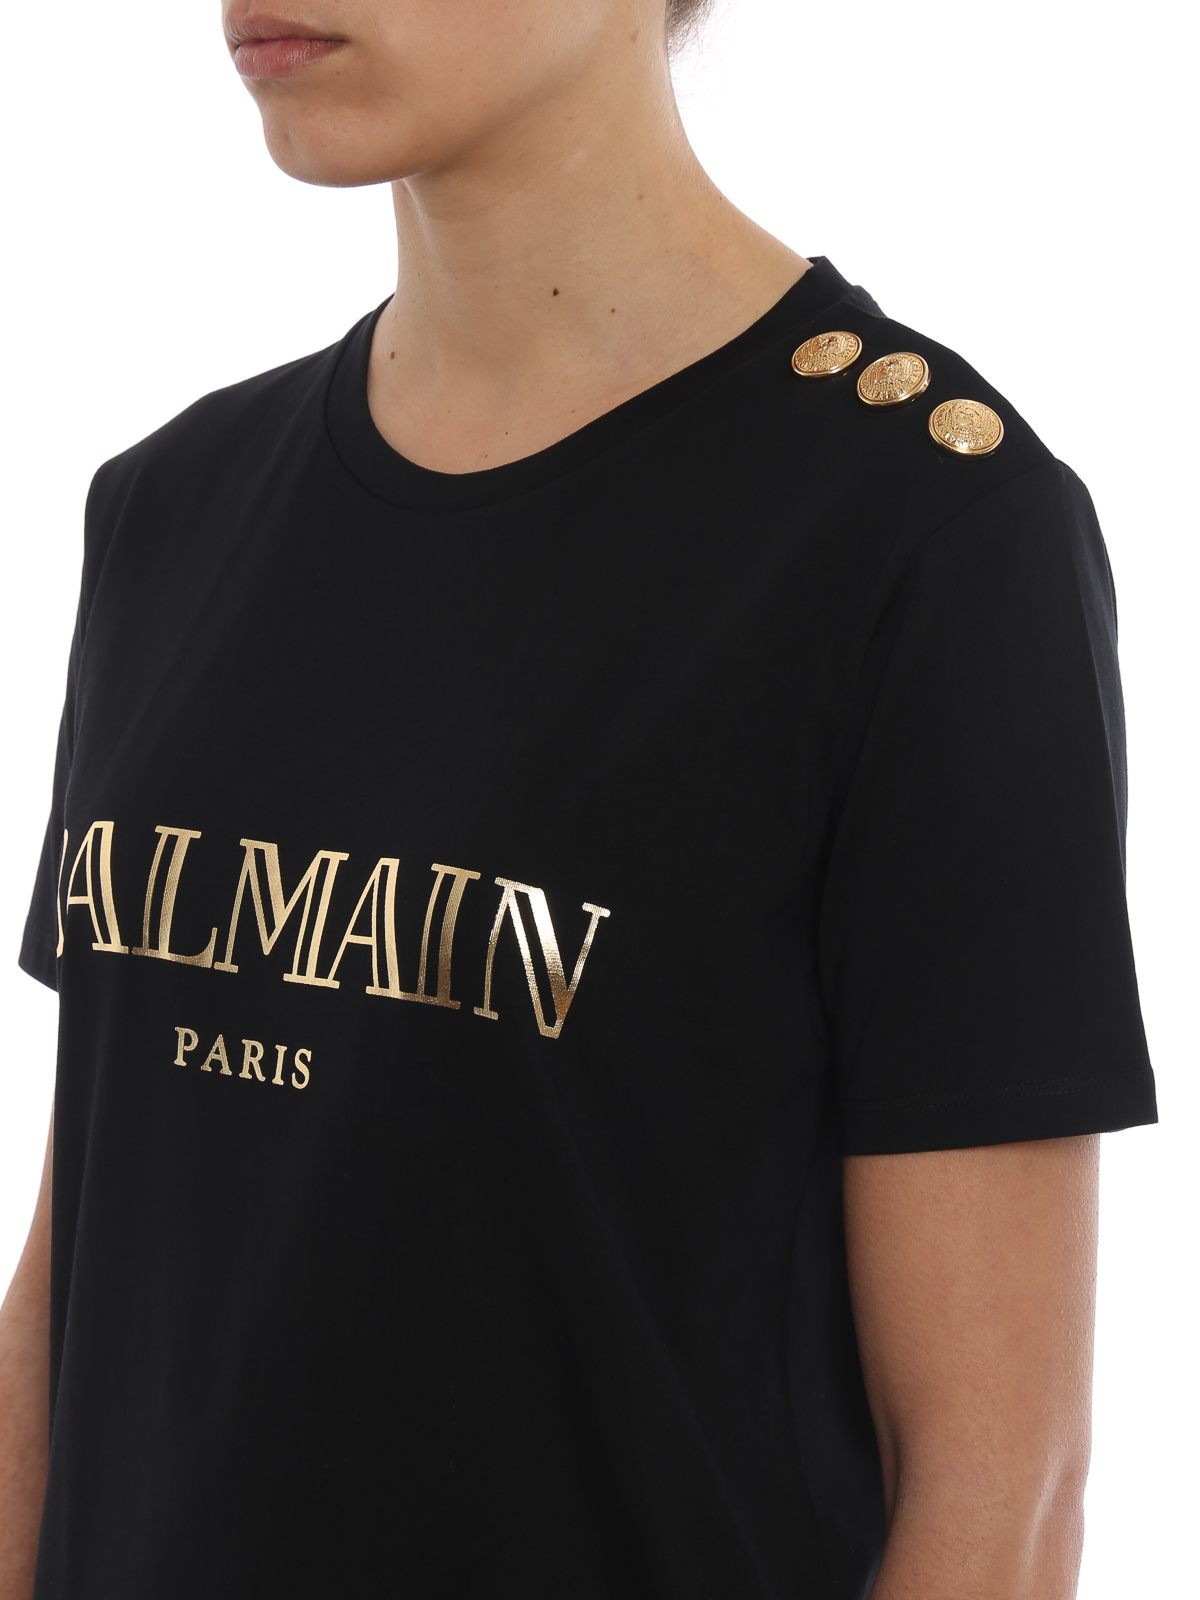 T-shirts Balmain - Balmain black cotton jersey T-shirt - SF11077I042EAD